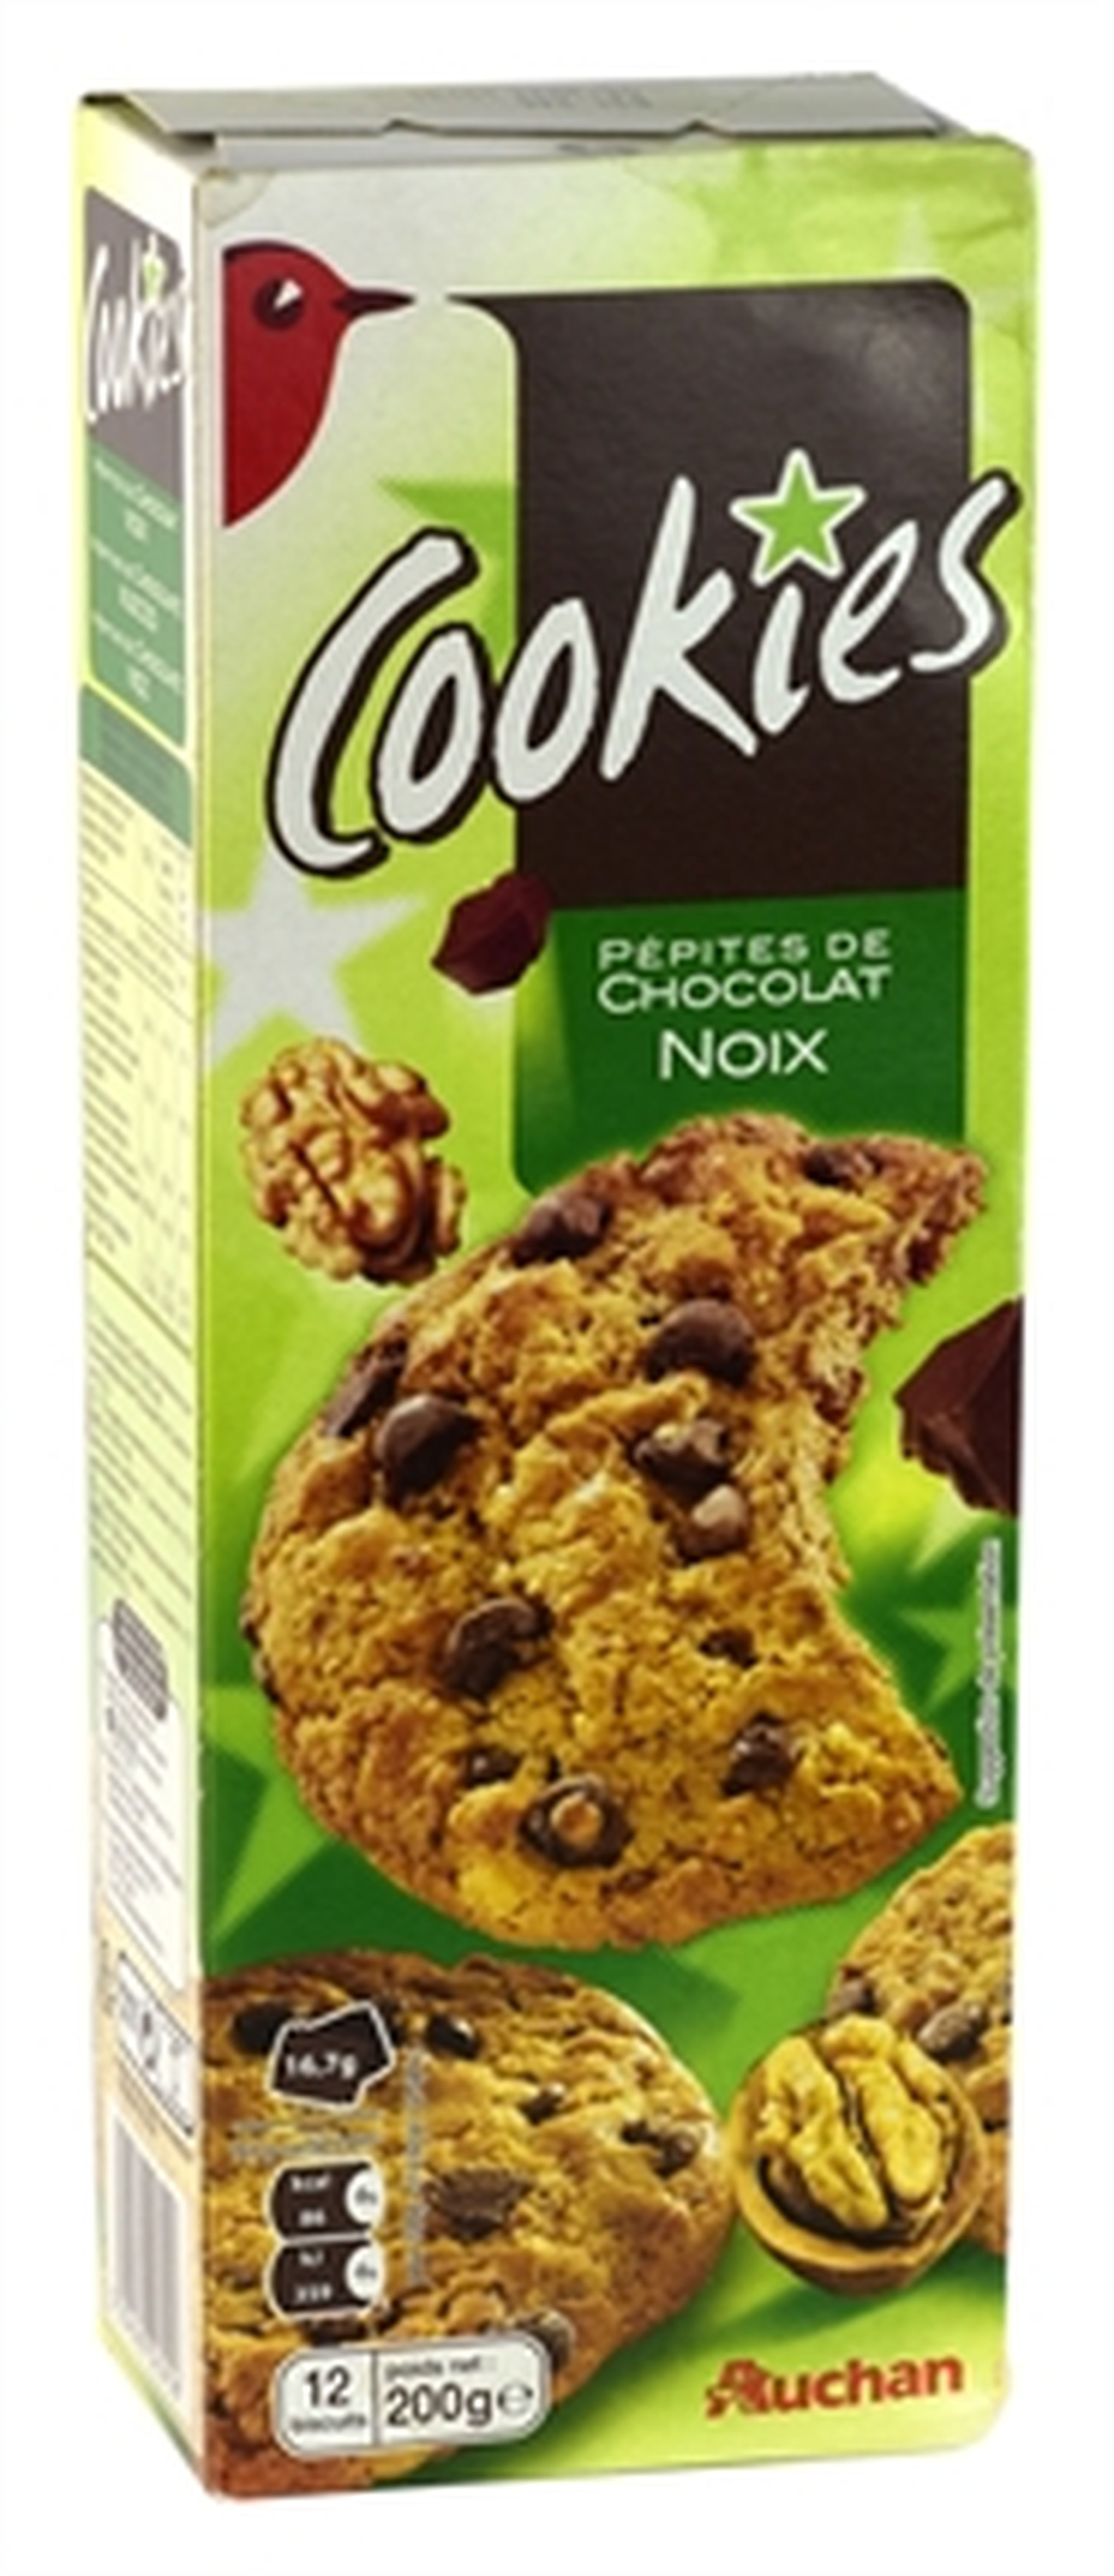 Cookies pepitas de chocolate y nueves, galletas Auchan